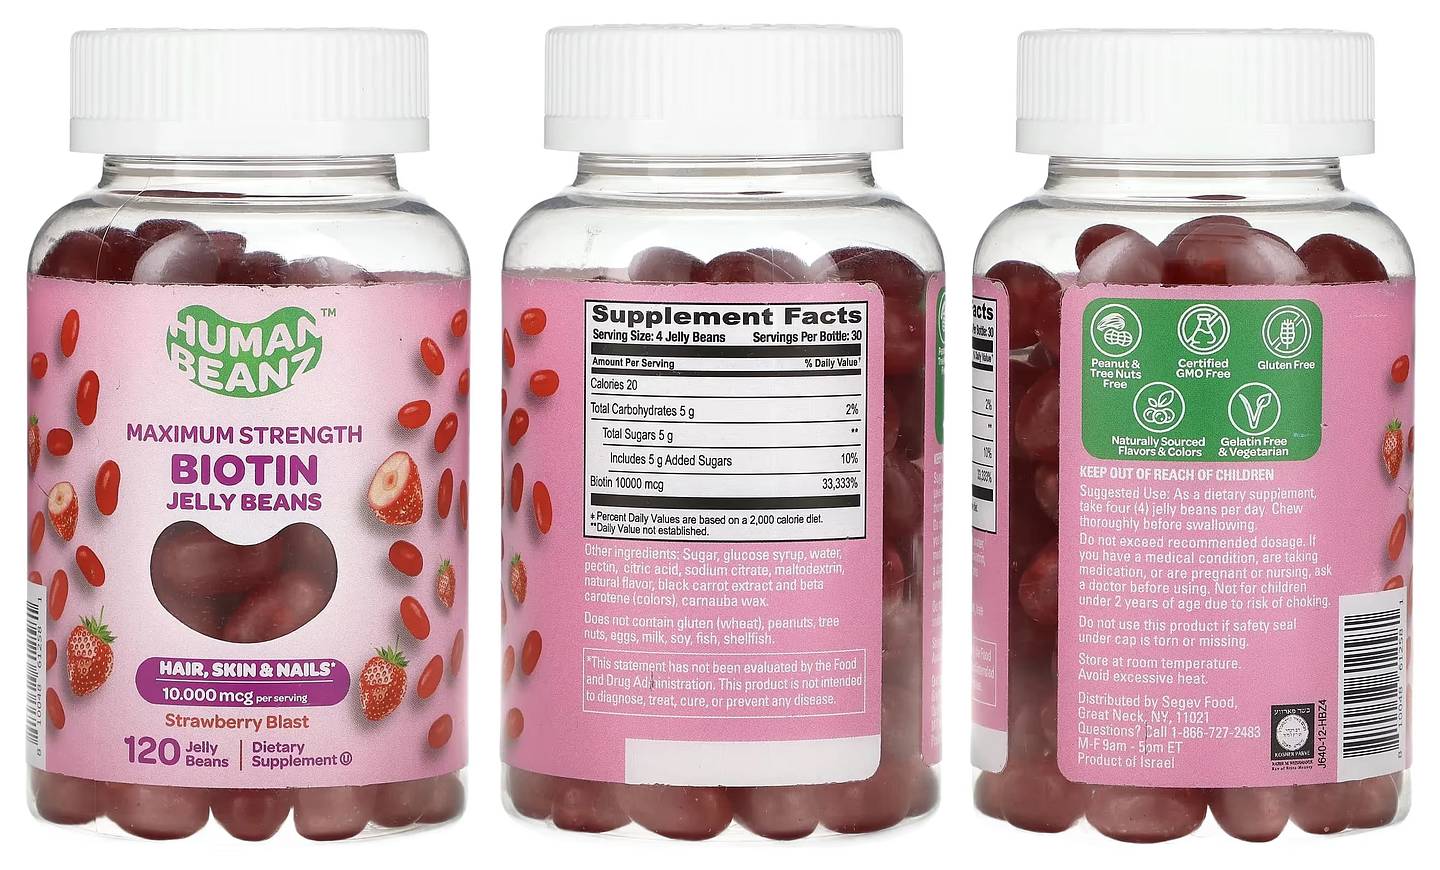 Human Beanz, Biotin Jelly Beans, Maximum Strength, Strawberry Blast, 2,500 mcg packaging